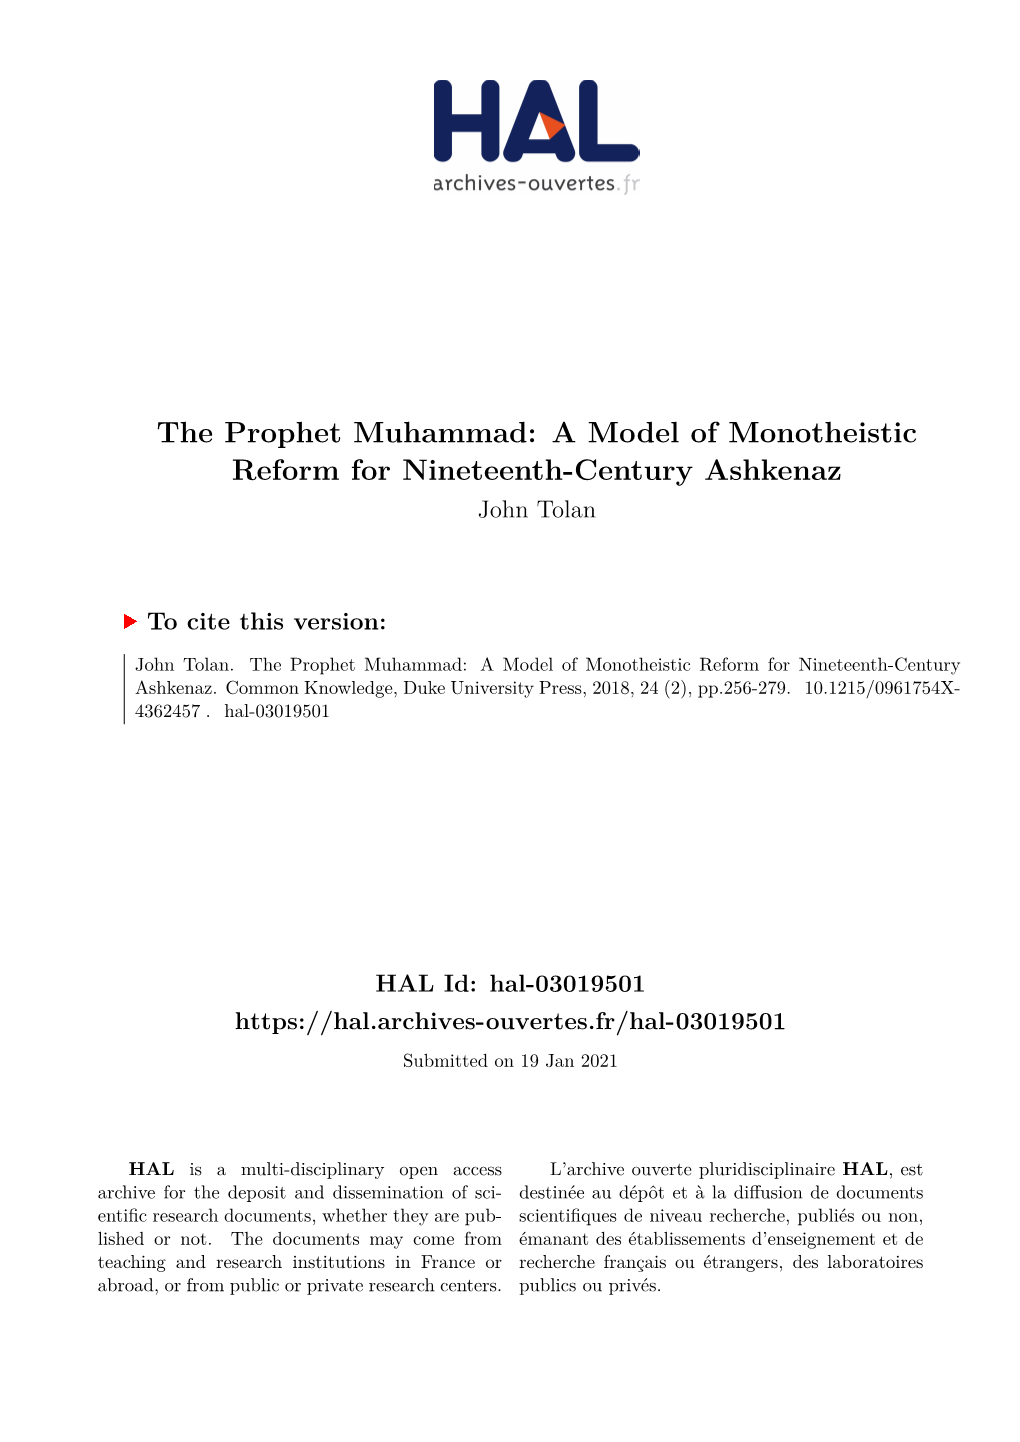 The Prophet Muhammad: a Model of Monotheistic Reform for Nineteenth-Century Ashkenaz John Tolan